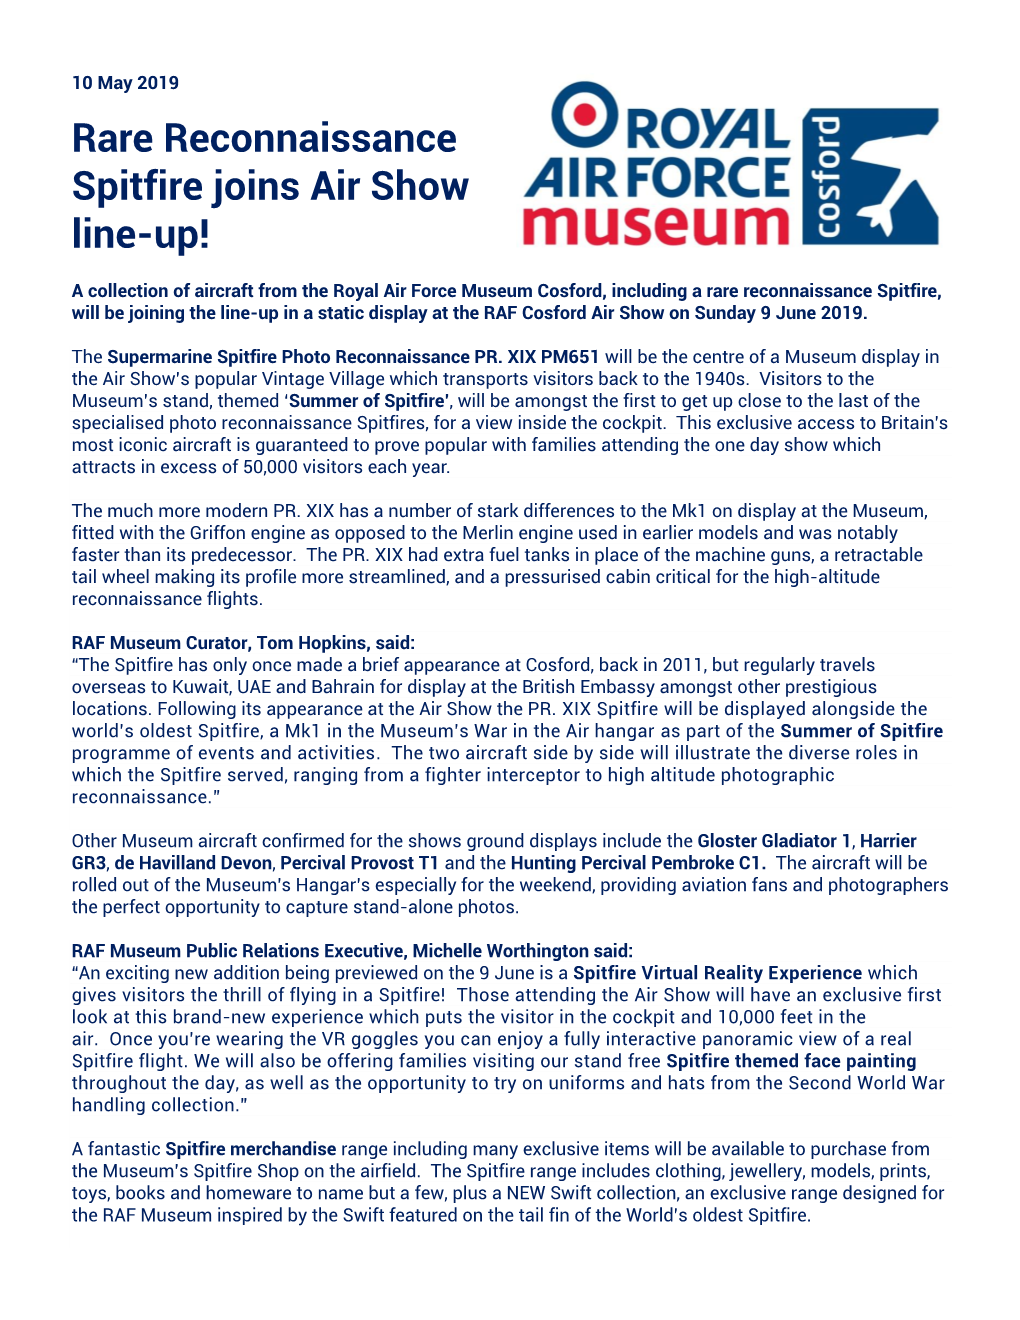 Rare Reconnaissance Spitfire Joins Air Show Line-Up!